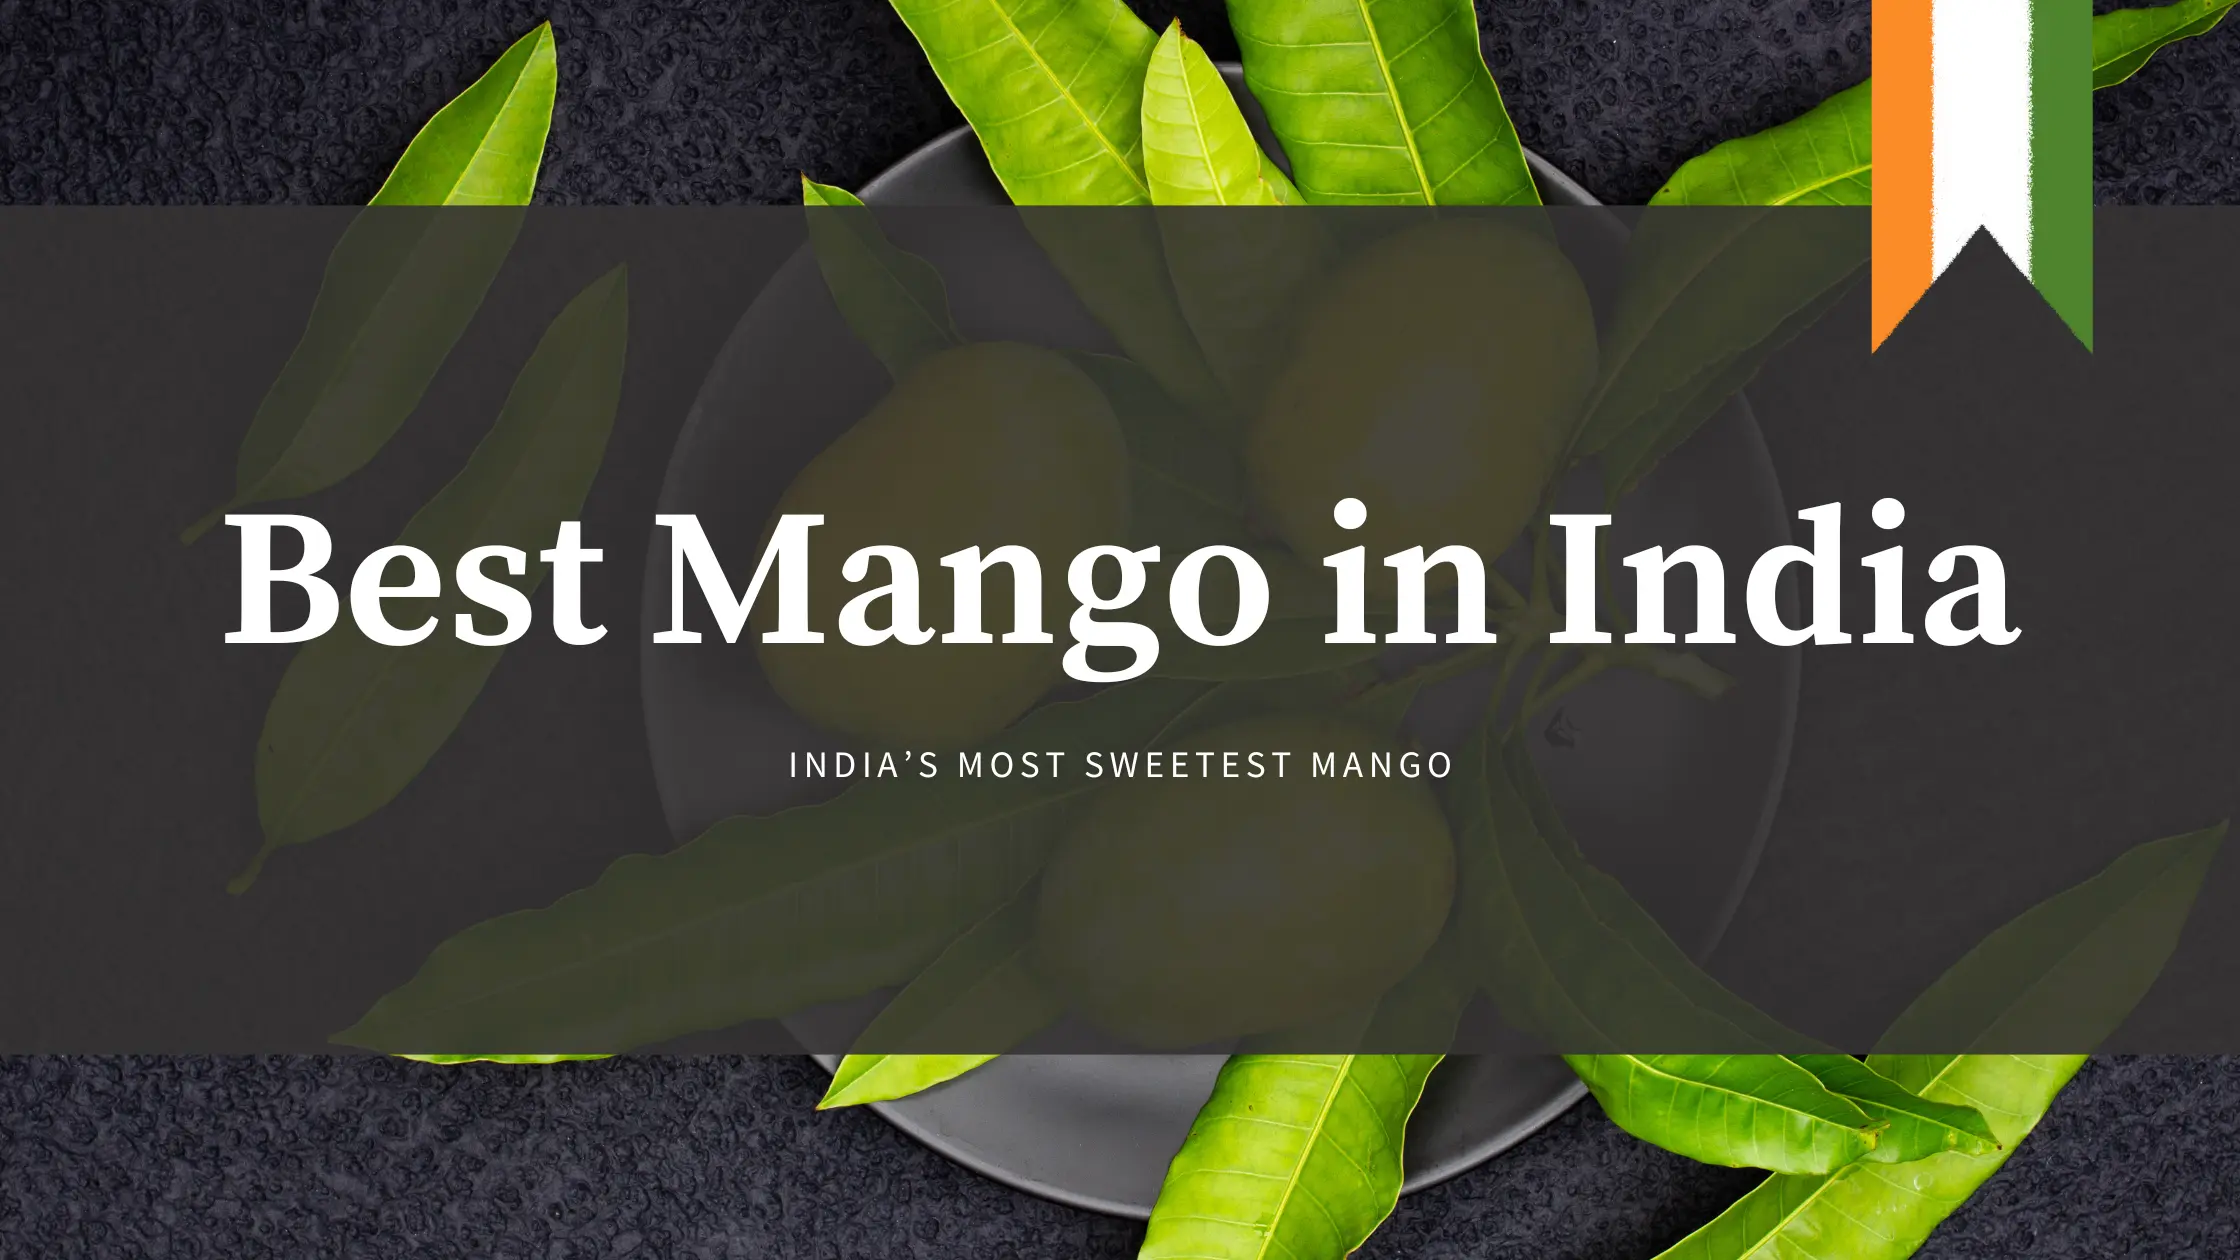 India's most tasty mangoes